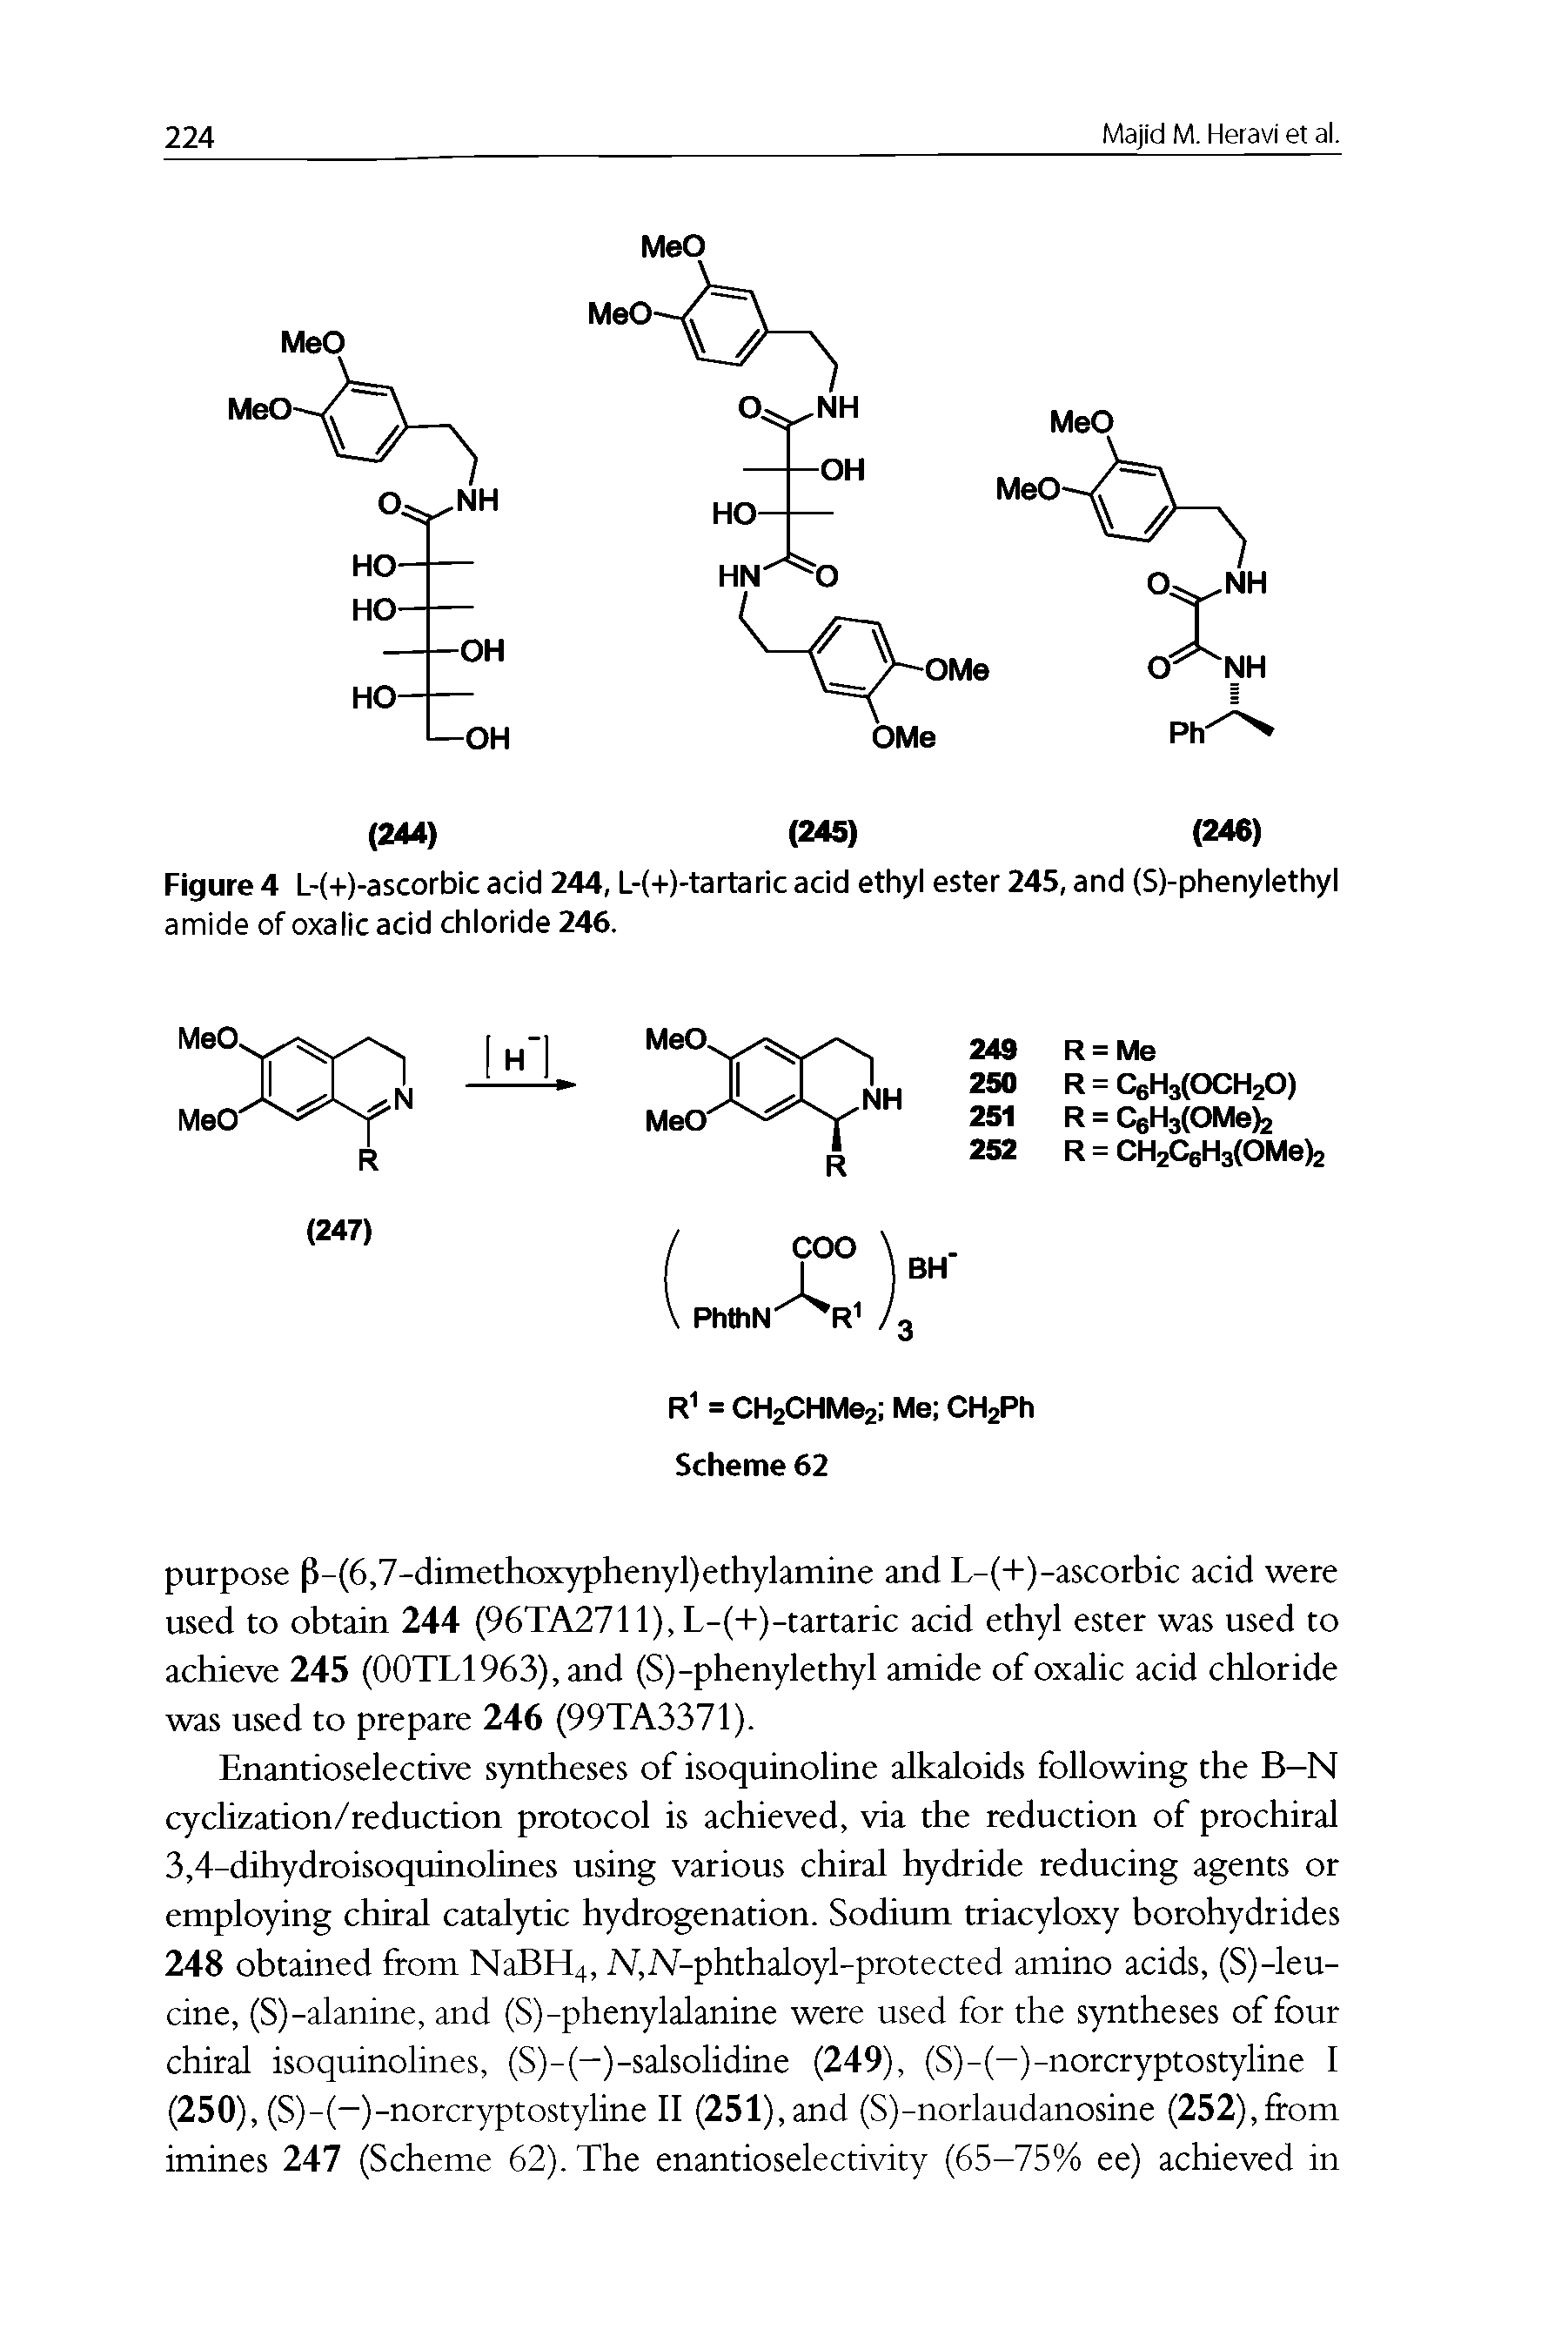 Figure 4 L-(+)-ascorbic acid 244, L-(+)-tartaric acid ethyl ester 245, and (S)-phenylethyl amide of oxalic acid chloride 246.